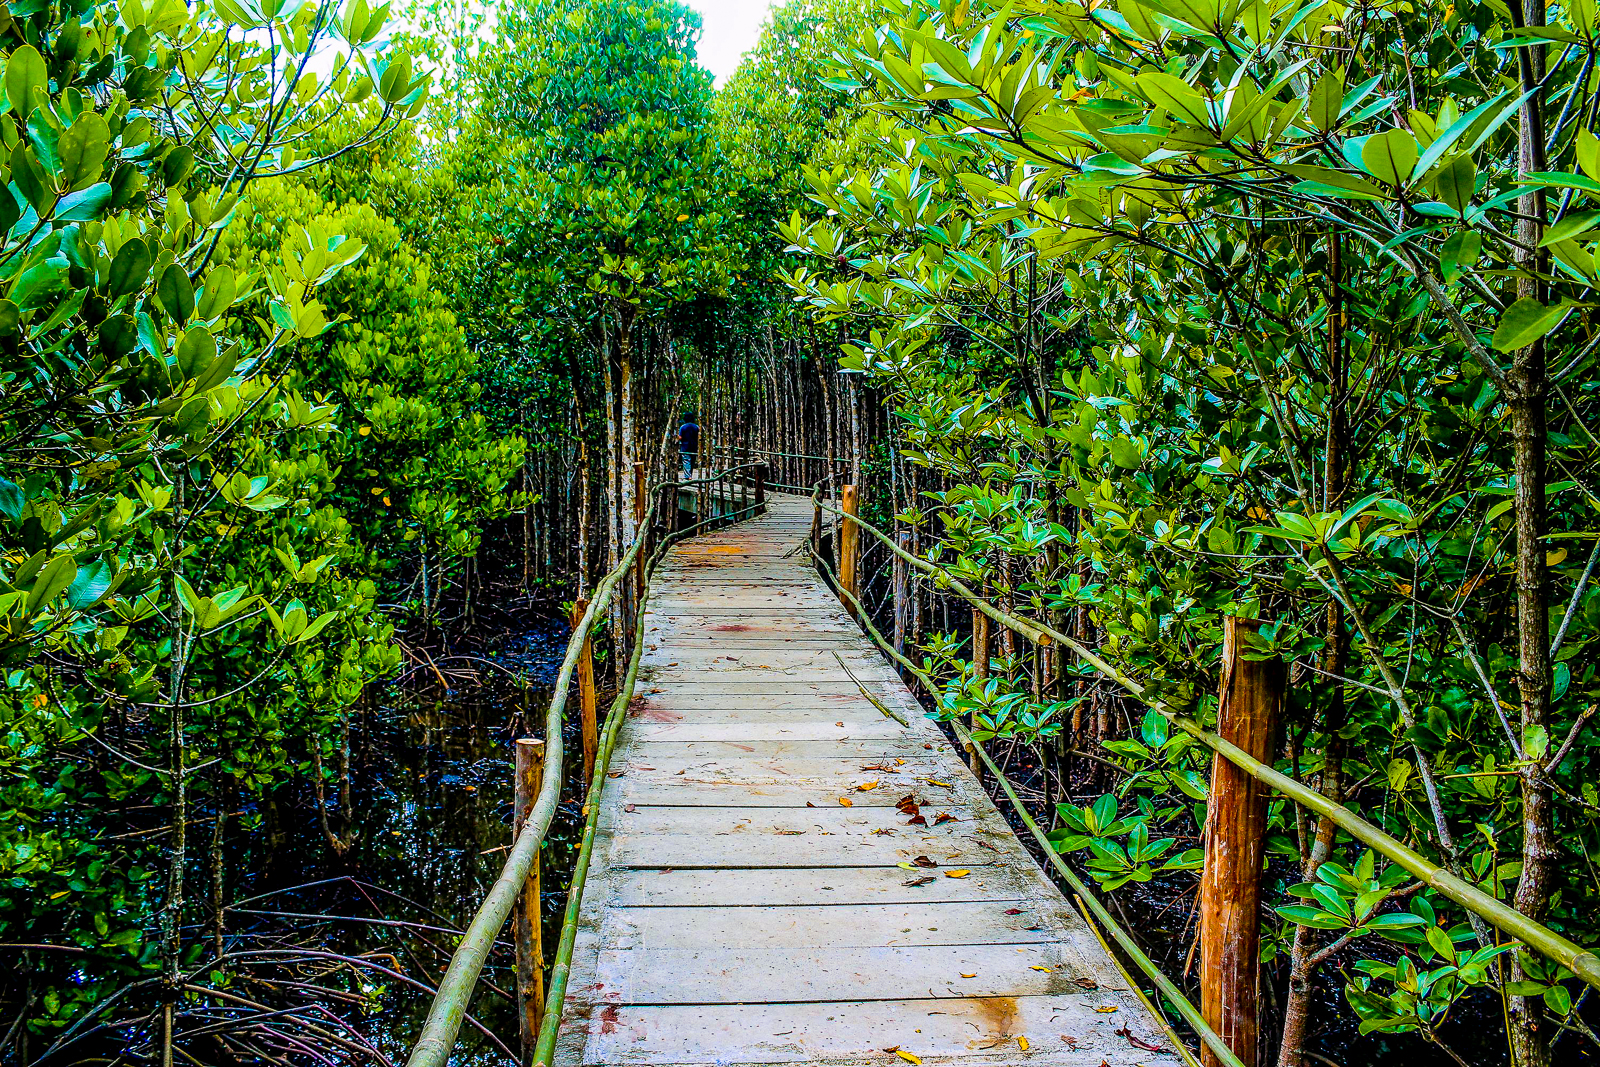 A walkway through the mangroves of Bang Krachao in Thailand